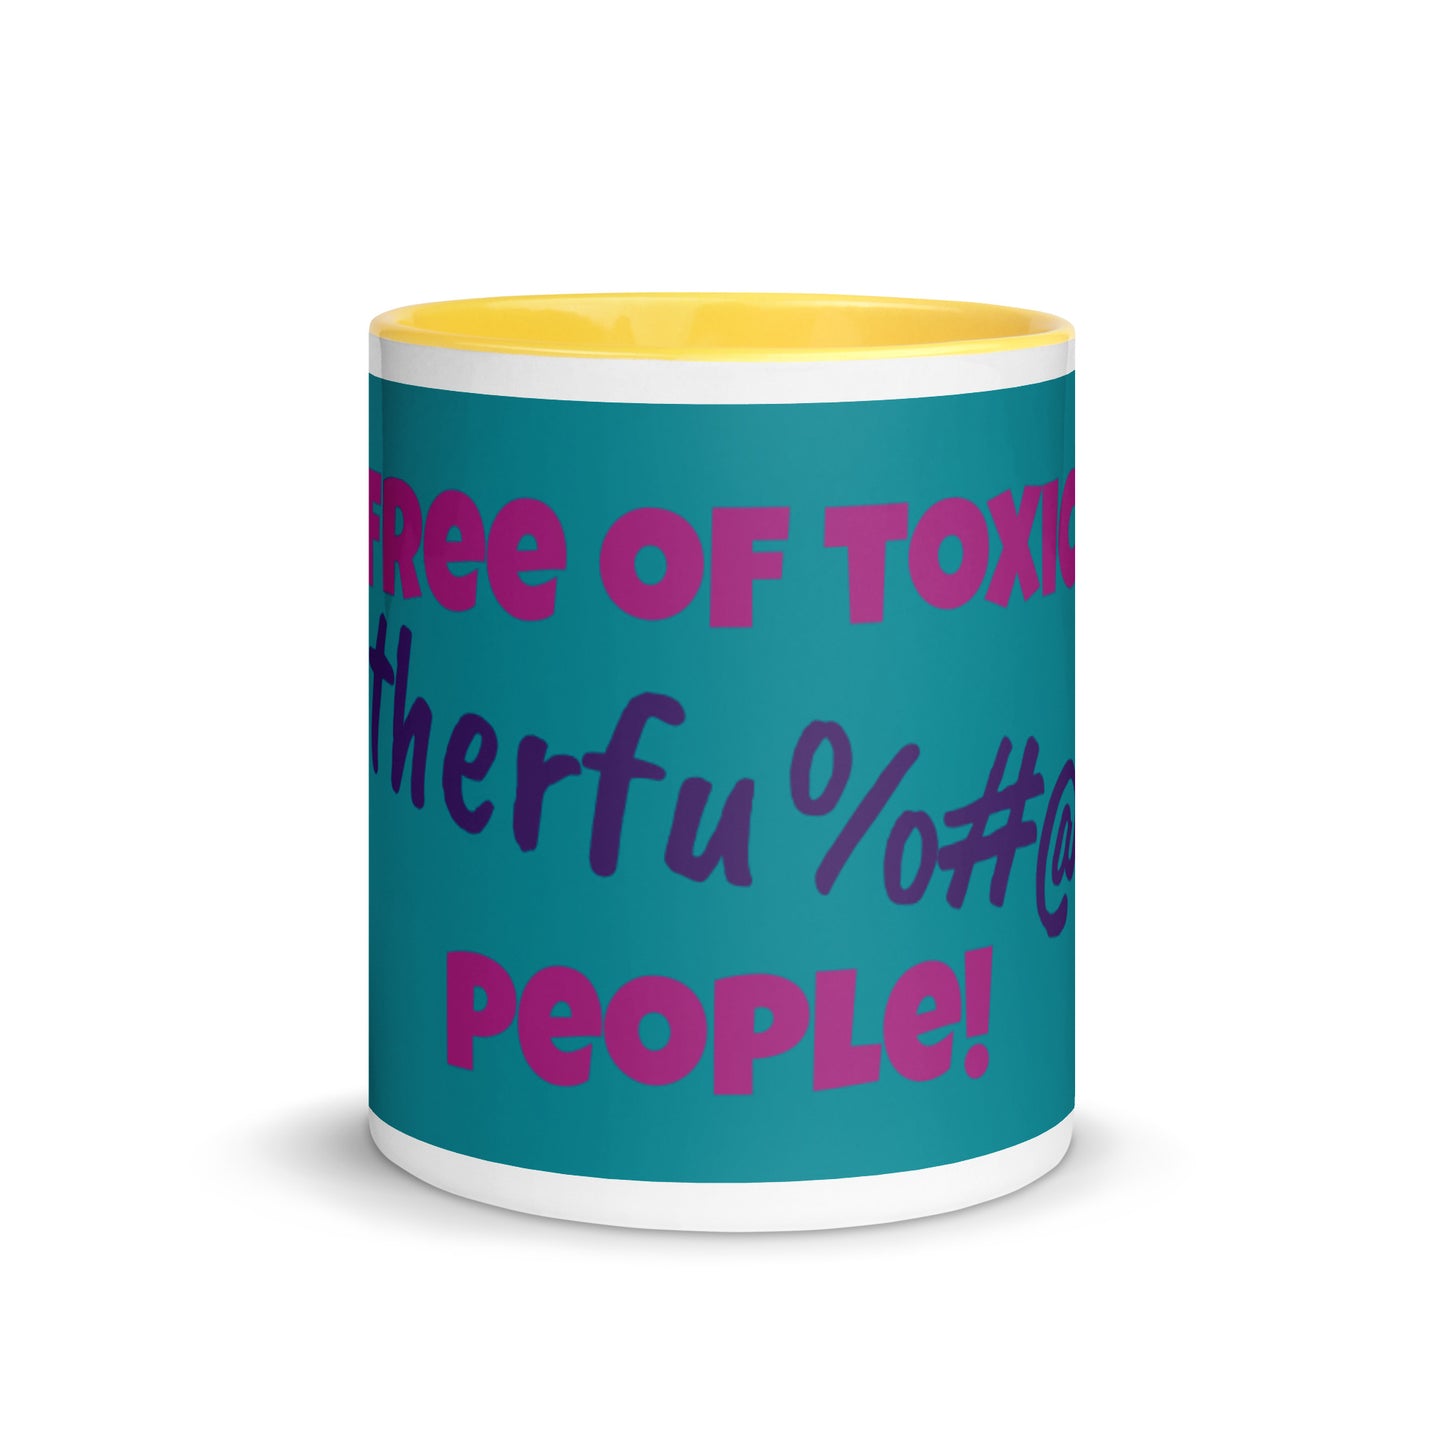 Teal Color Mug - Free of toxic #$% people!